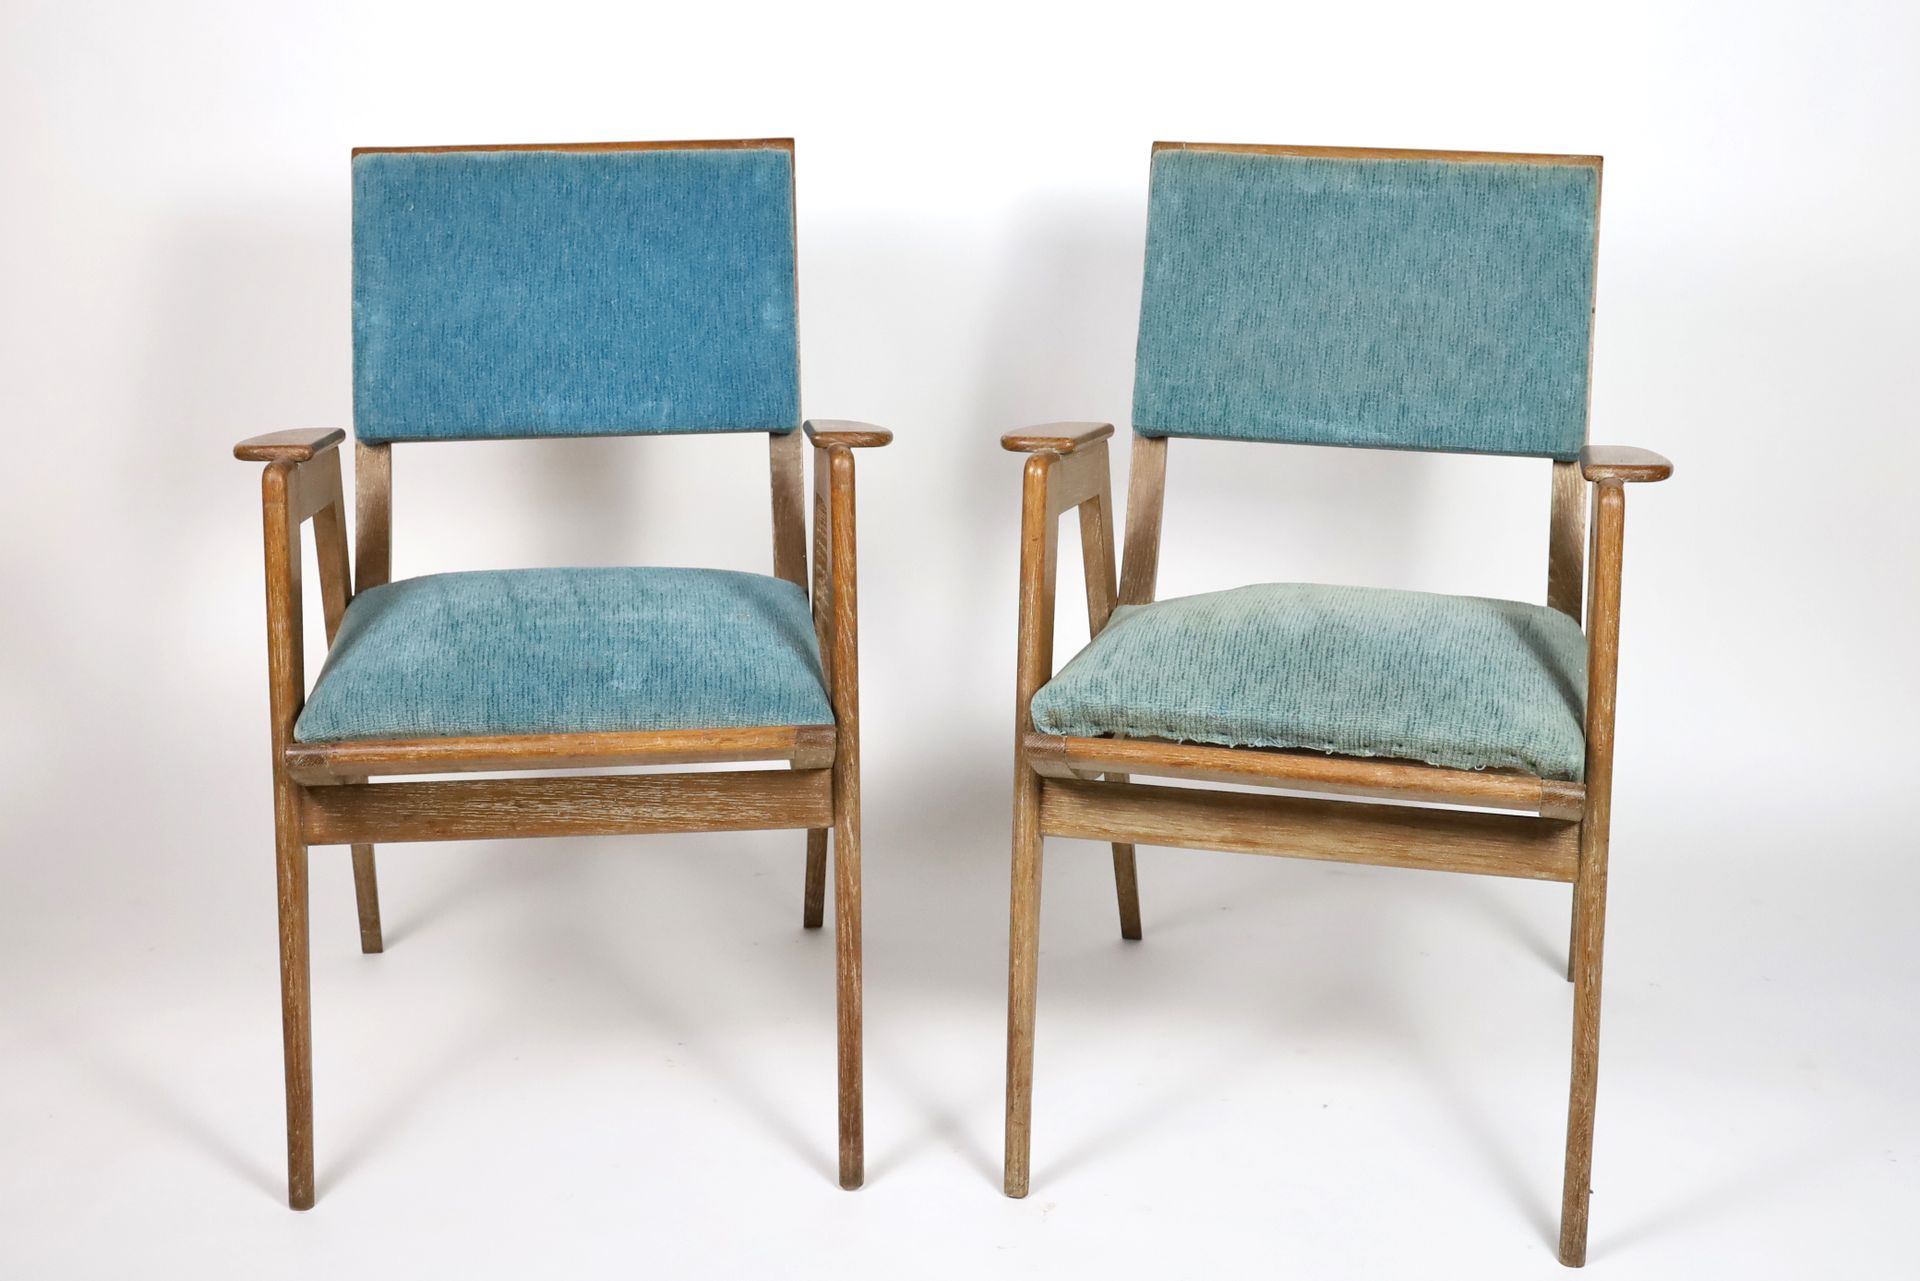 Null PAQUEBOT - 天然木扶手椅一对，座椅和靠背为蓝色天鹅绒 - 高89厘米，宽59厘米，长69厘米（划痕，磨损）